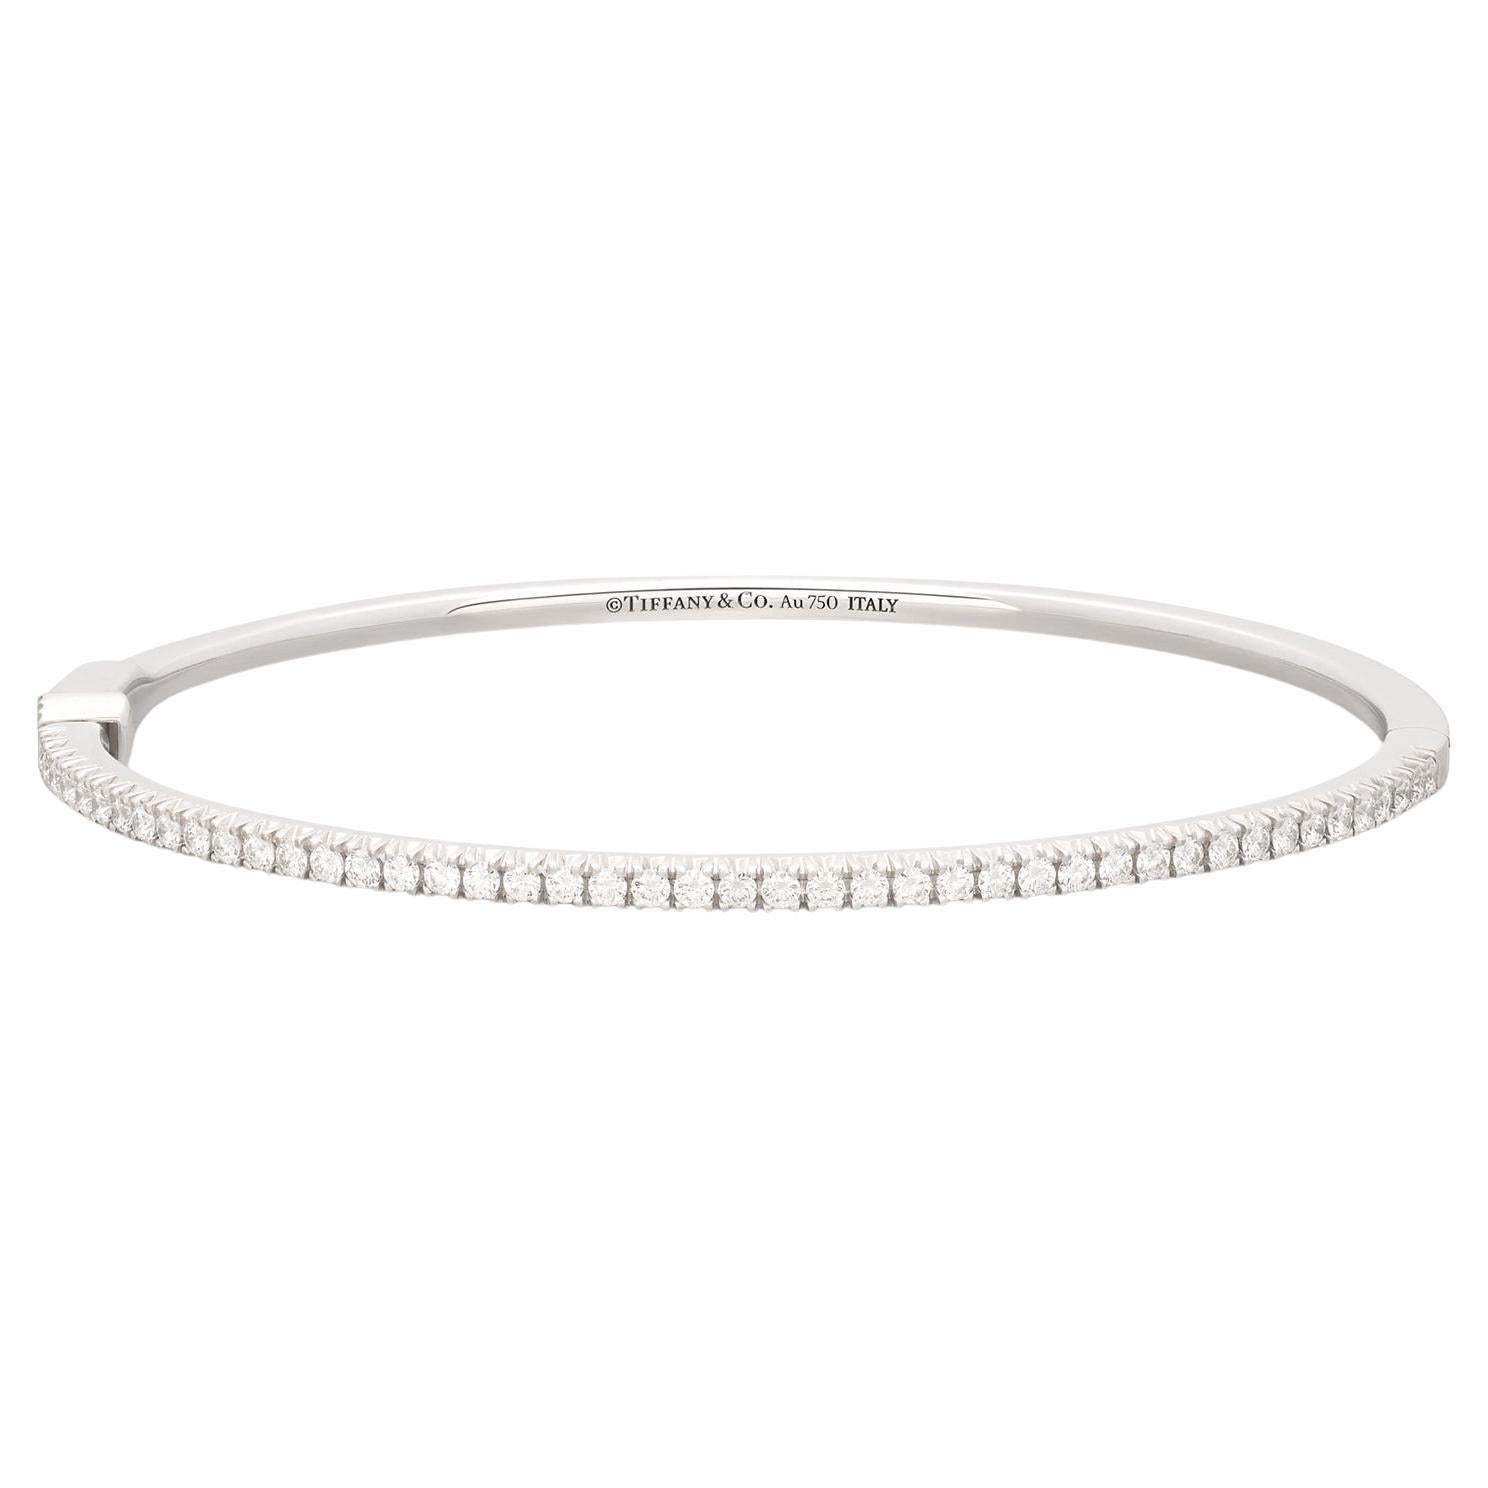 Tiffany & Co "Metro" Diamond Bangle Bracelet